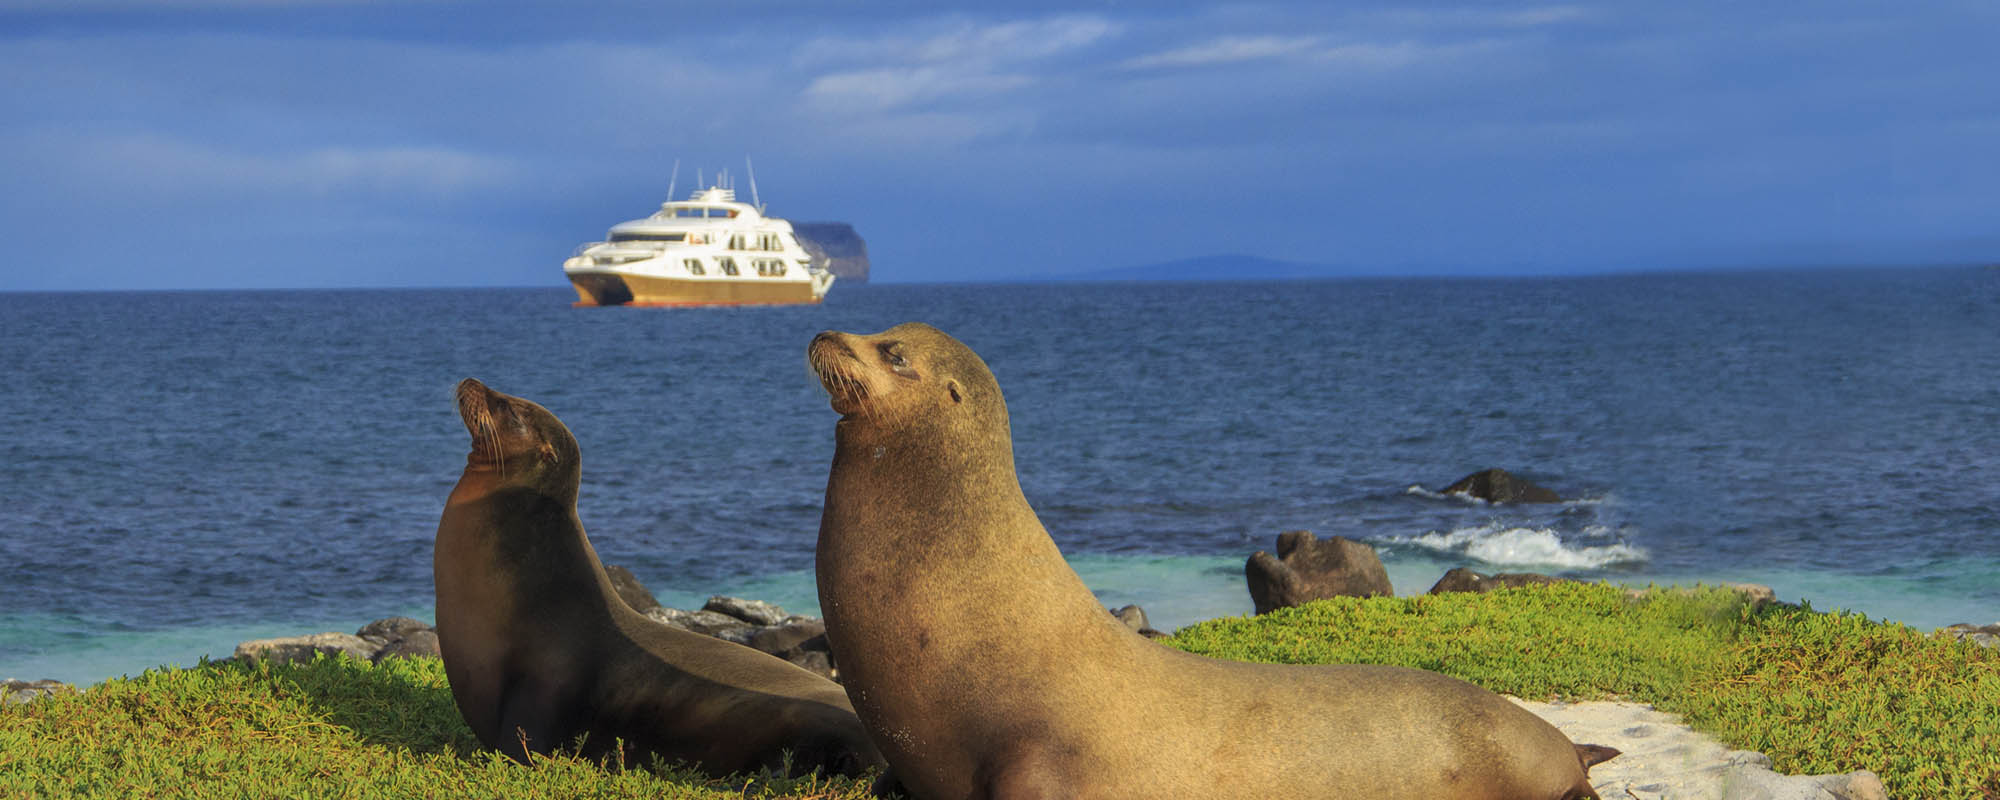 Galapagos Luxury Cruises Tours